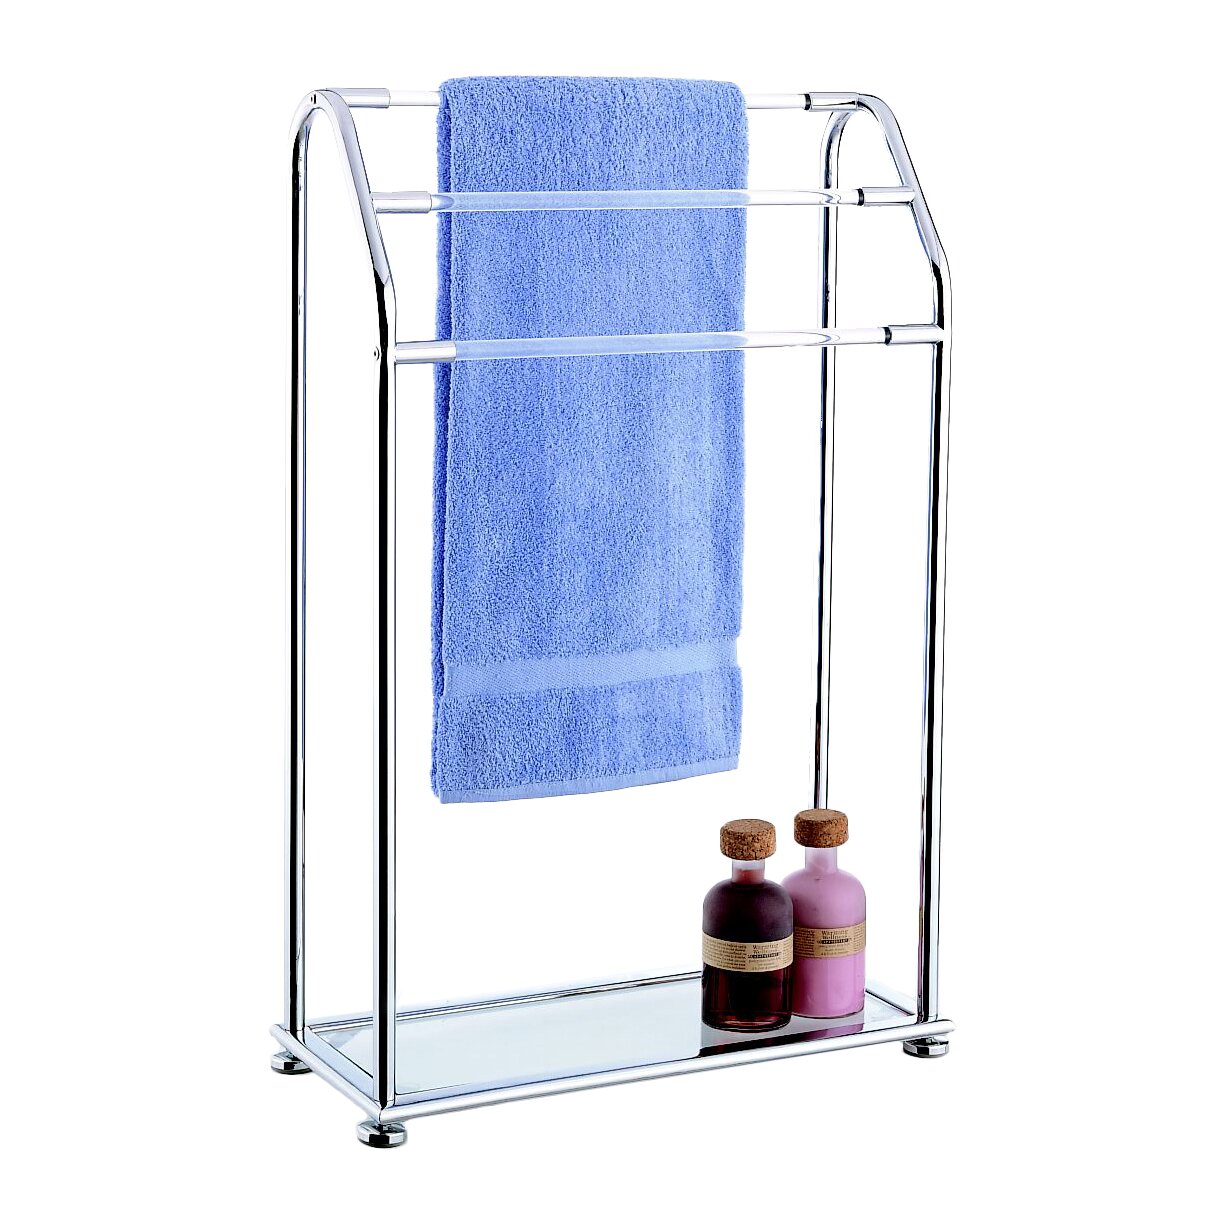 OIA Acrylic Free Standing Towel Stand & Reviews | Wayfair